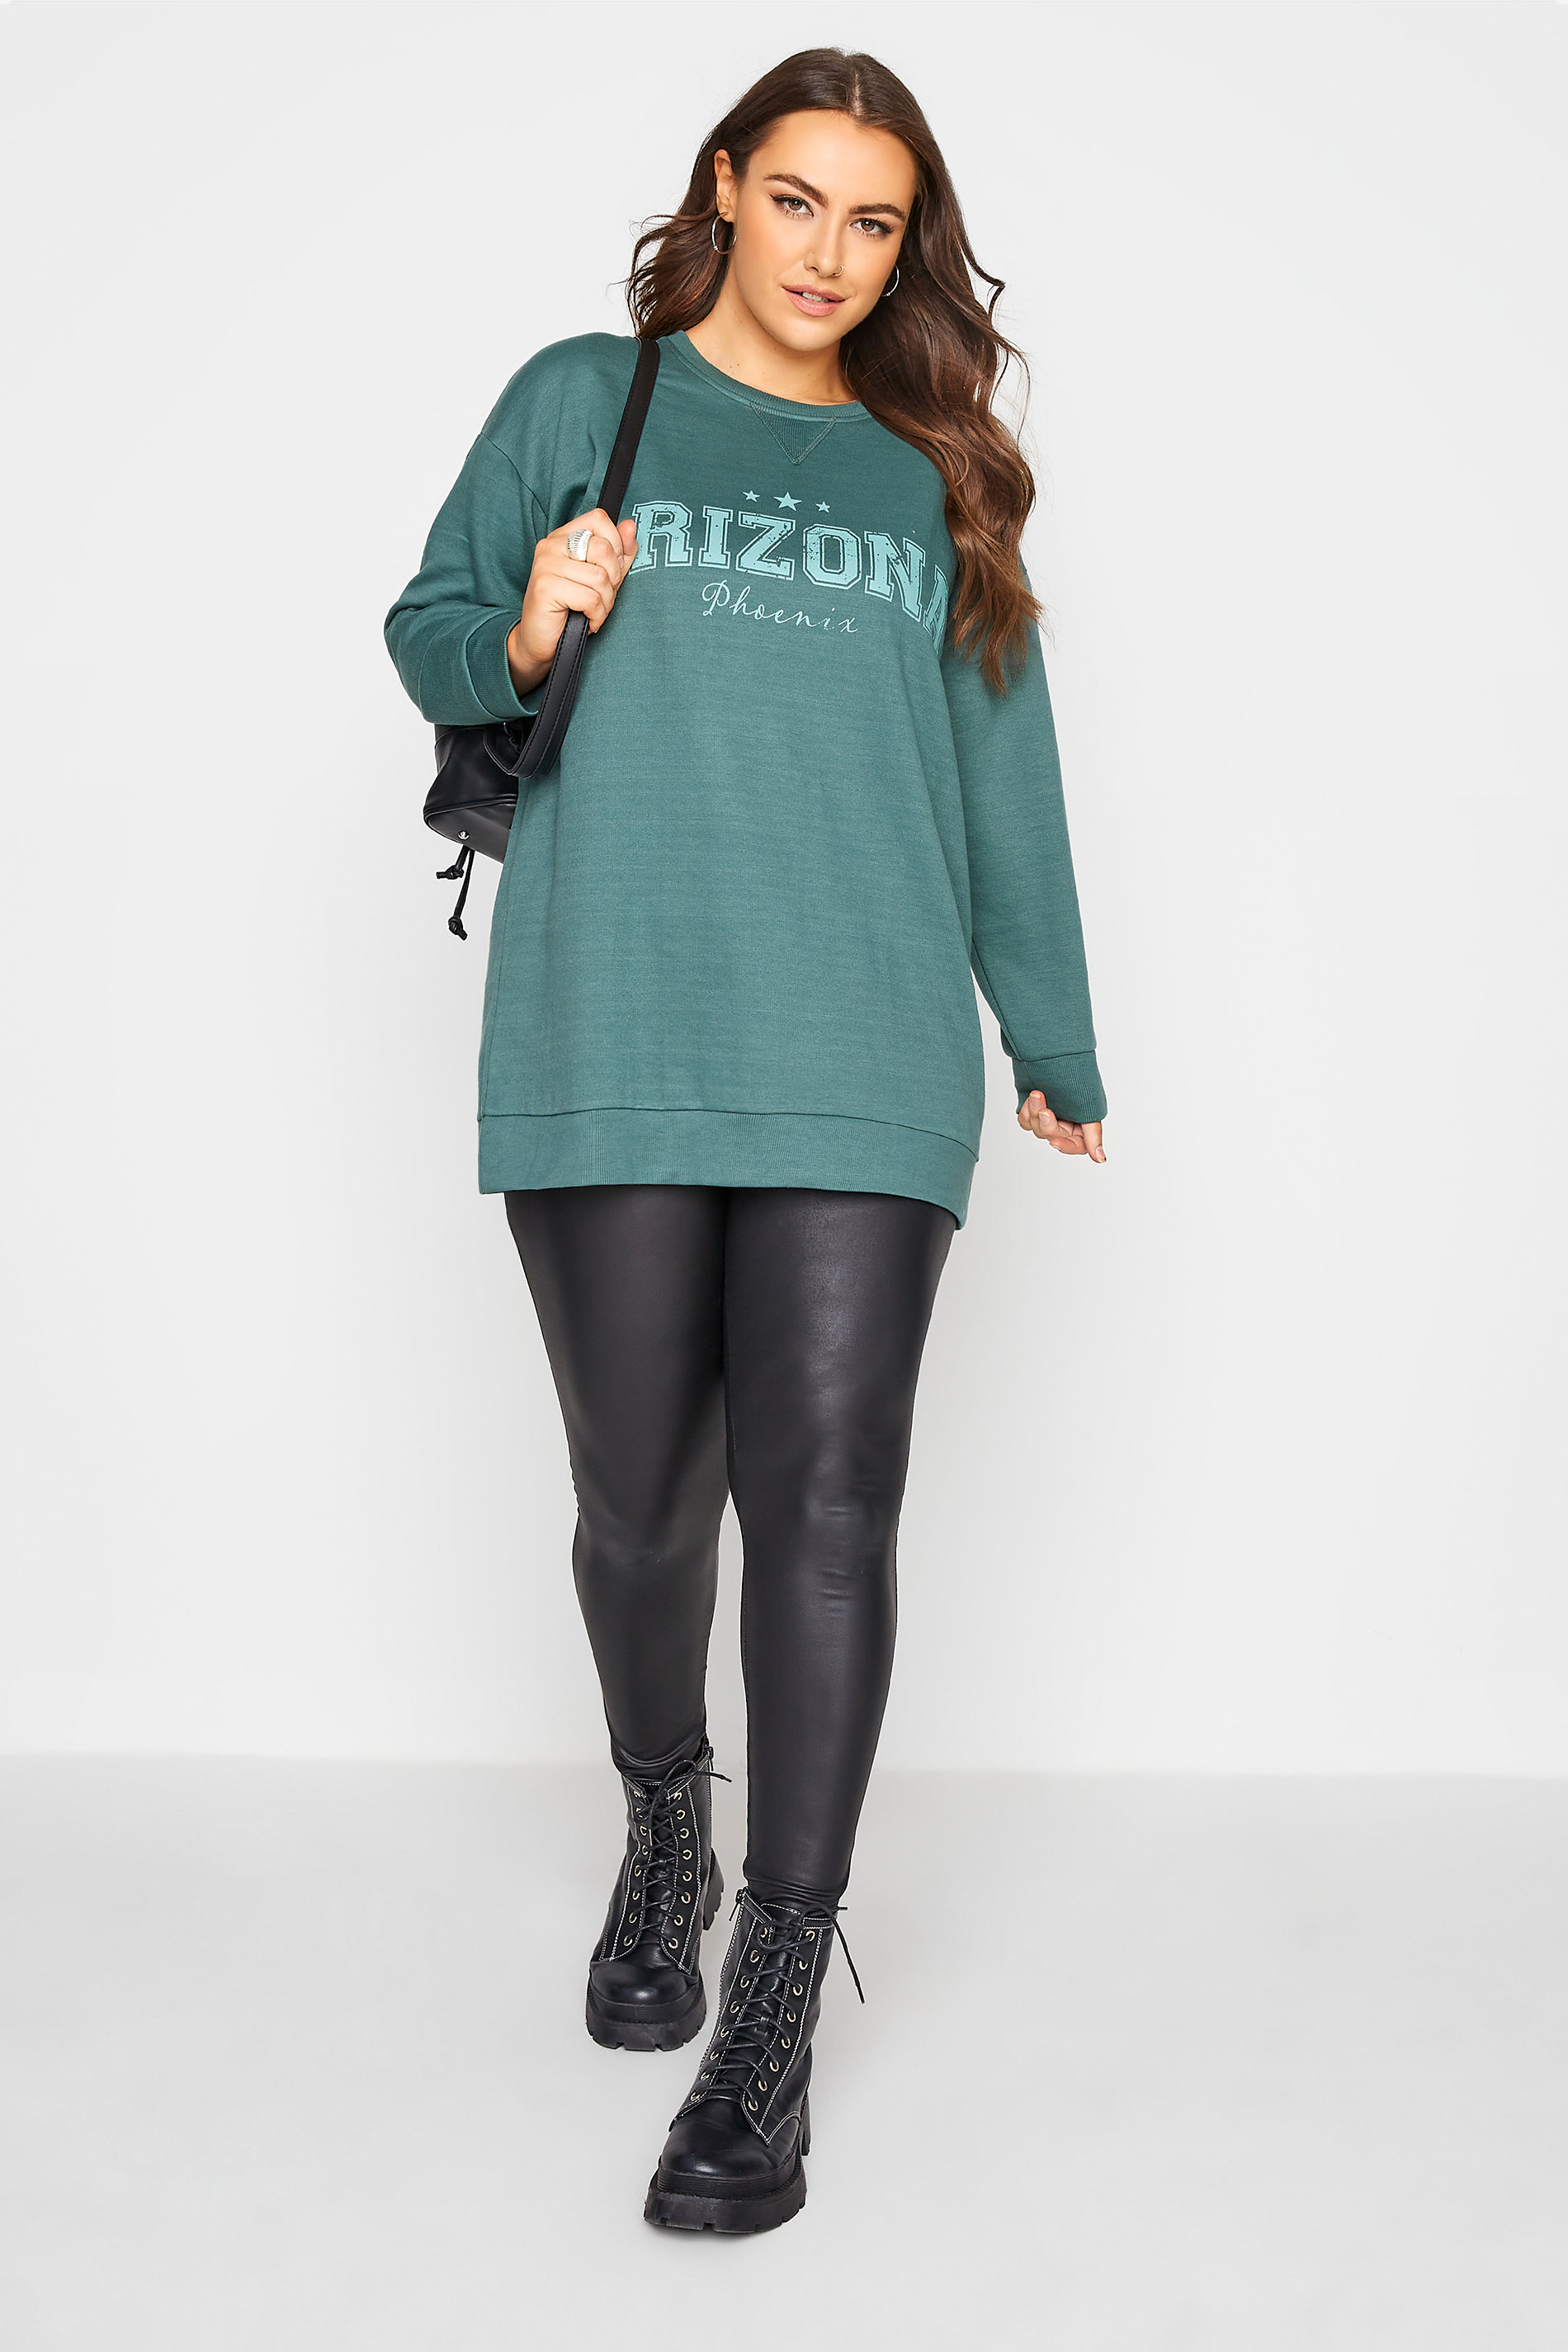 Grande taille  Pulls à Capuche, Sweatshirts & Polaires Grande taille  Sweatshirts | Sweatshirt Vert Slogan 'Arizona' - WD58321